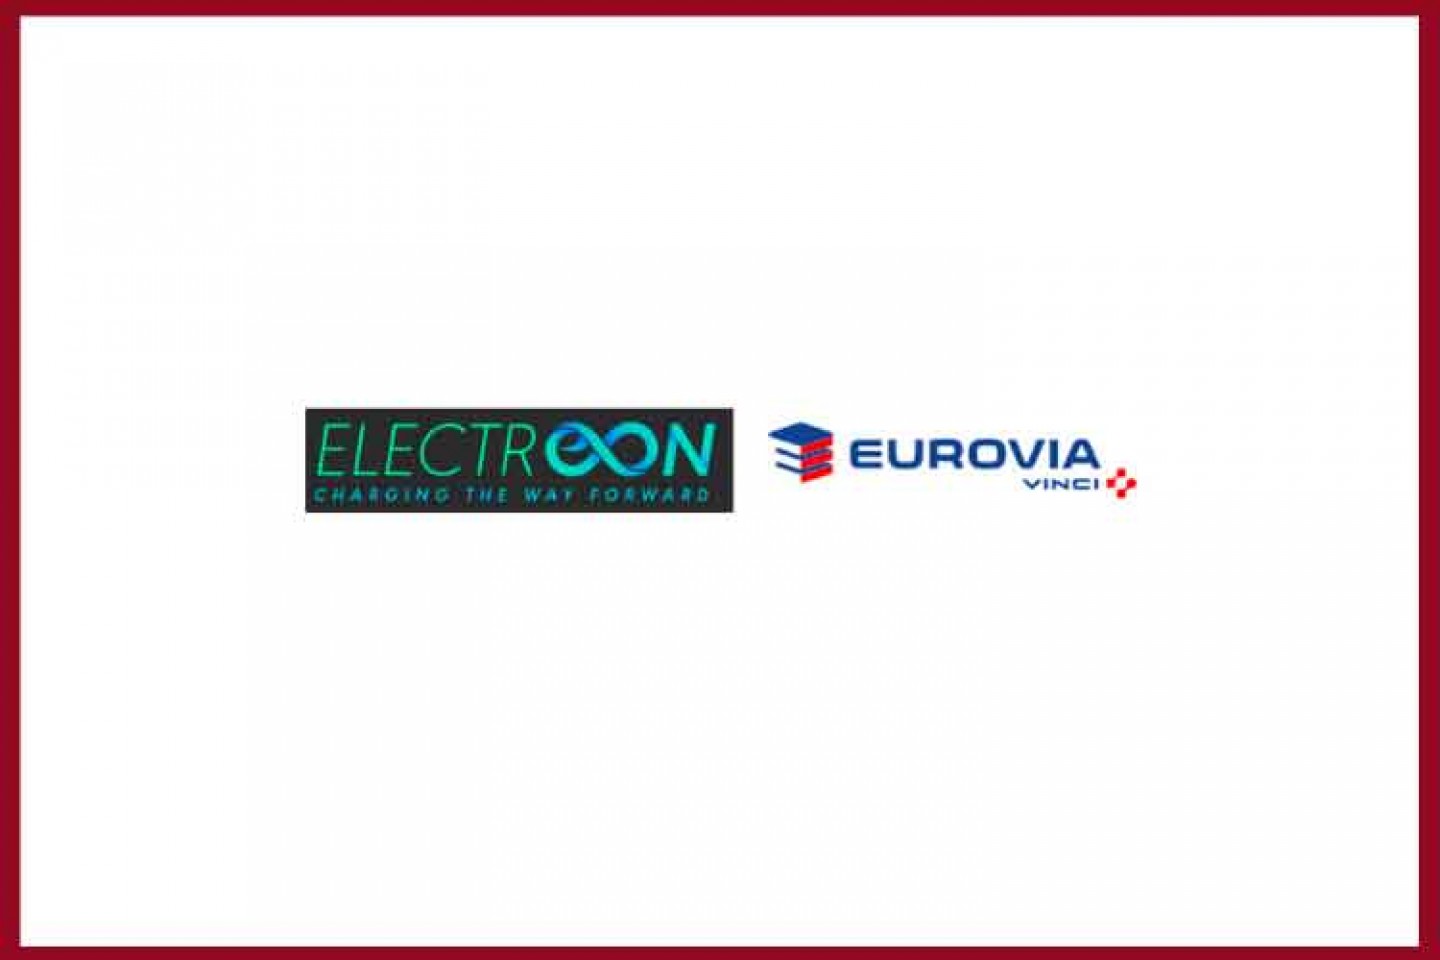 Electron-Eurovia